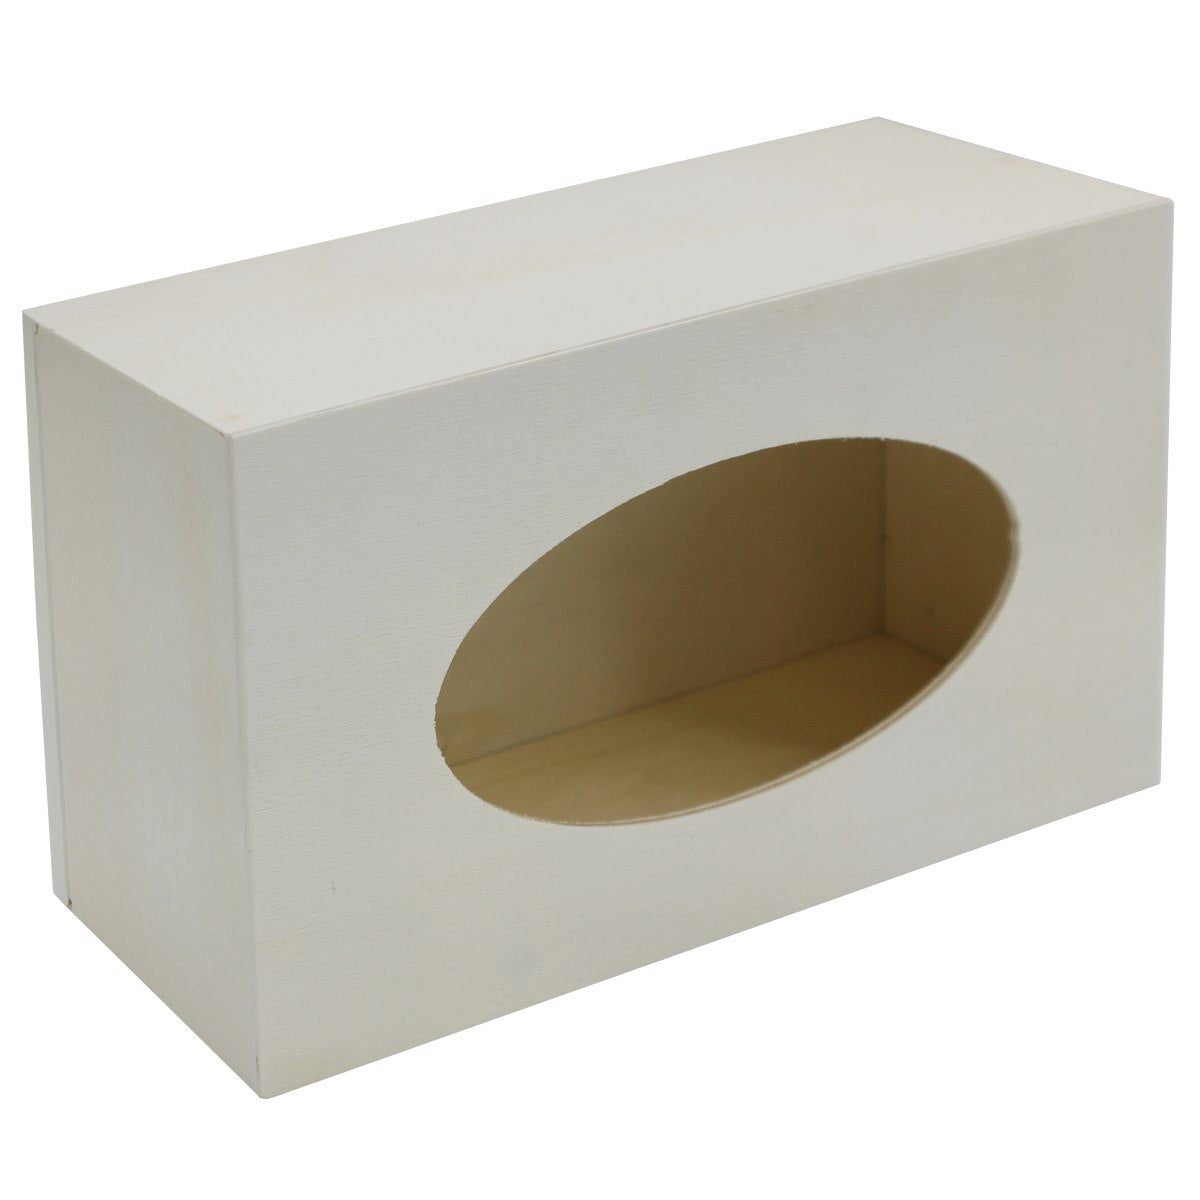 jags-mumbai Wooden Box Wooden Decoupage Tissue Box Big - Contain 1 Unit